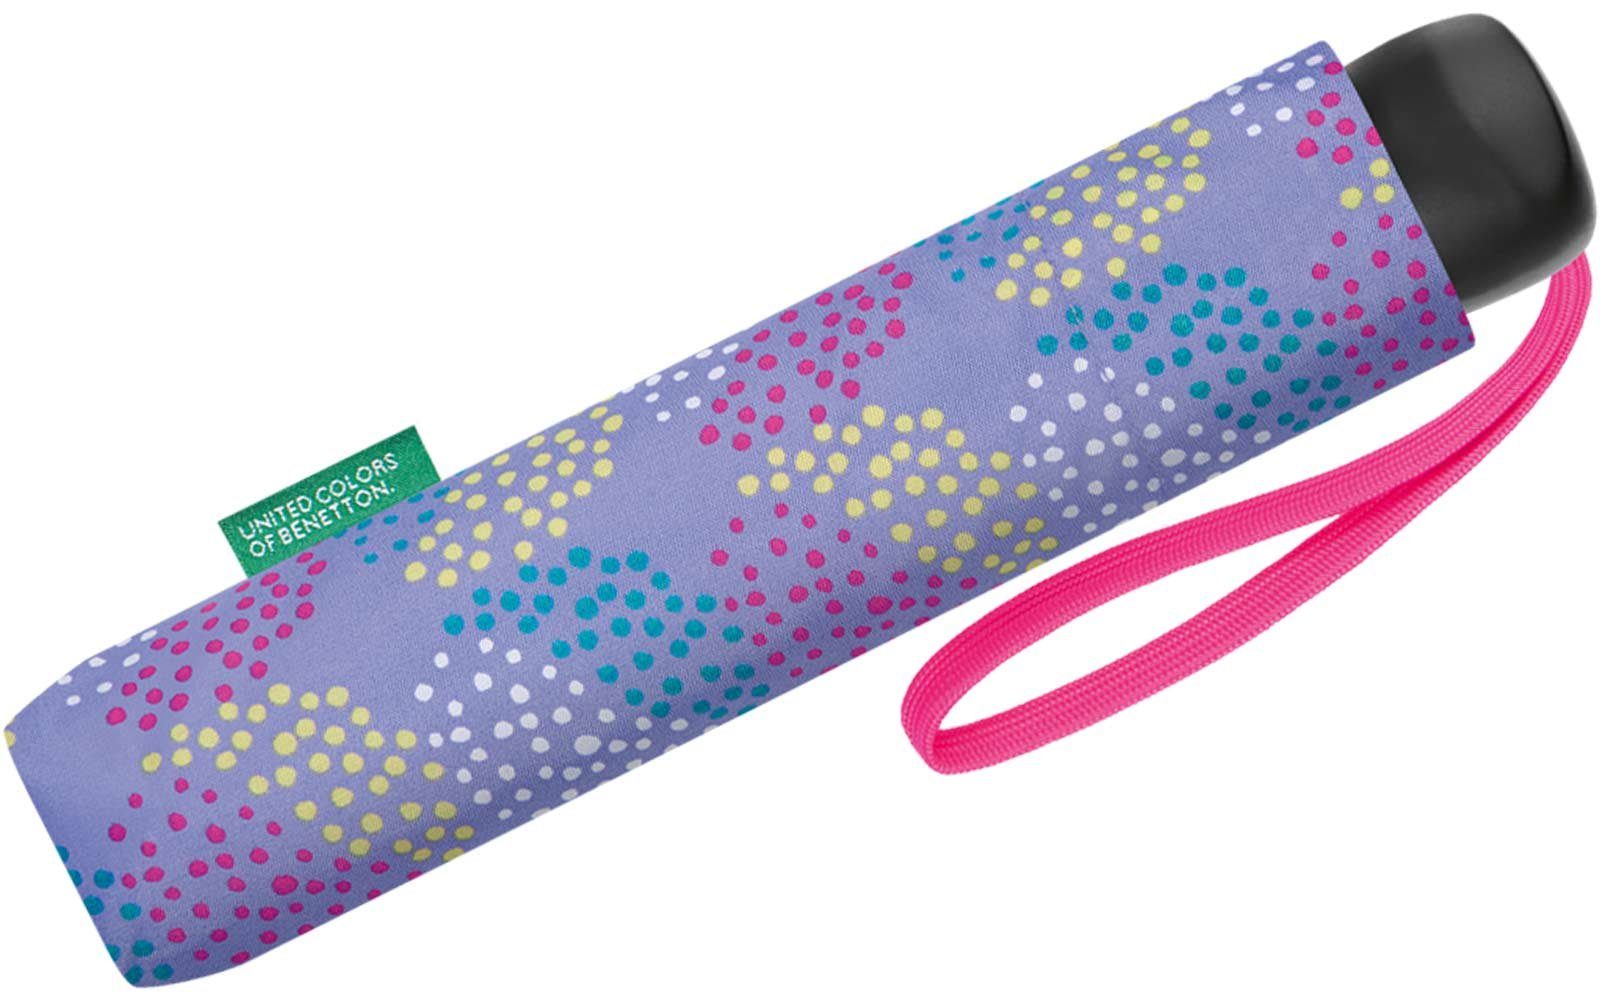 Pop periwinkle, violett Punkte-Kreise-Muster Dots - Mini mit Benetton deep Colors Super United modernem of Taschenregenschirm